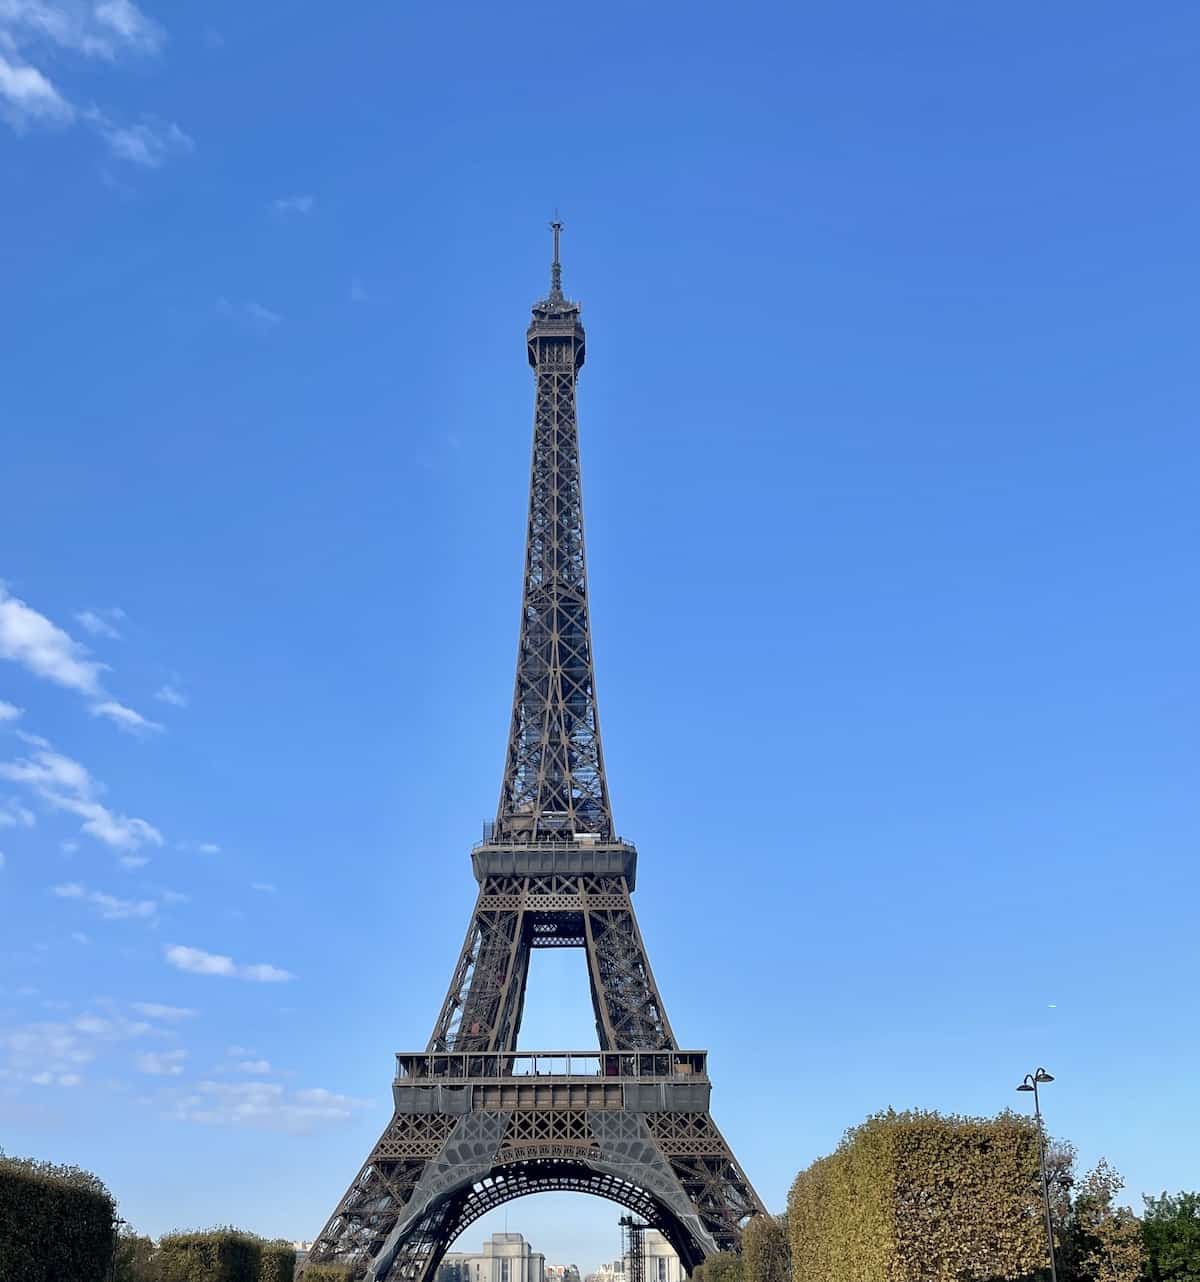 Eiffel Tower in Paris against a blue sky.